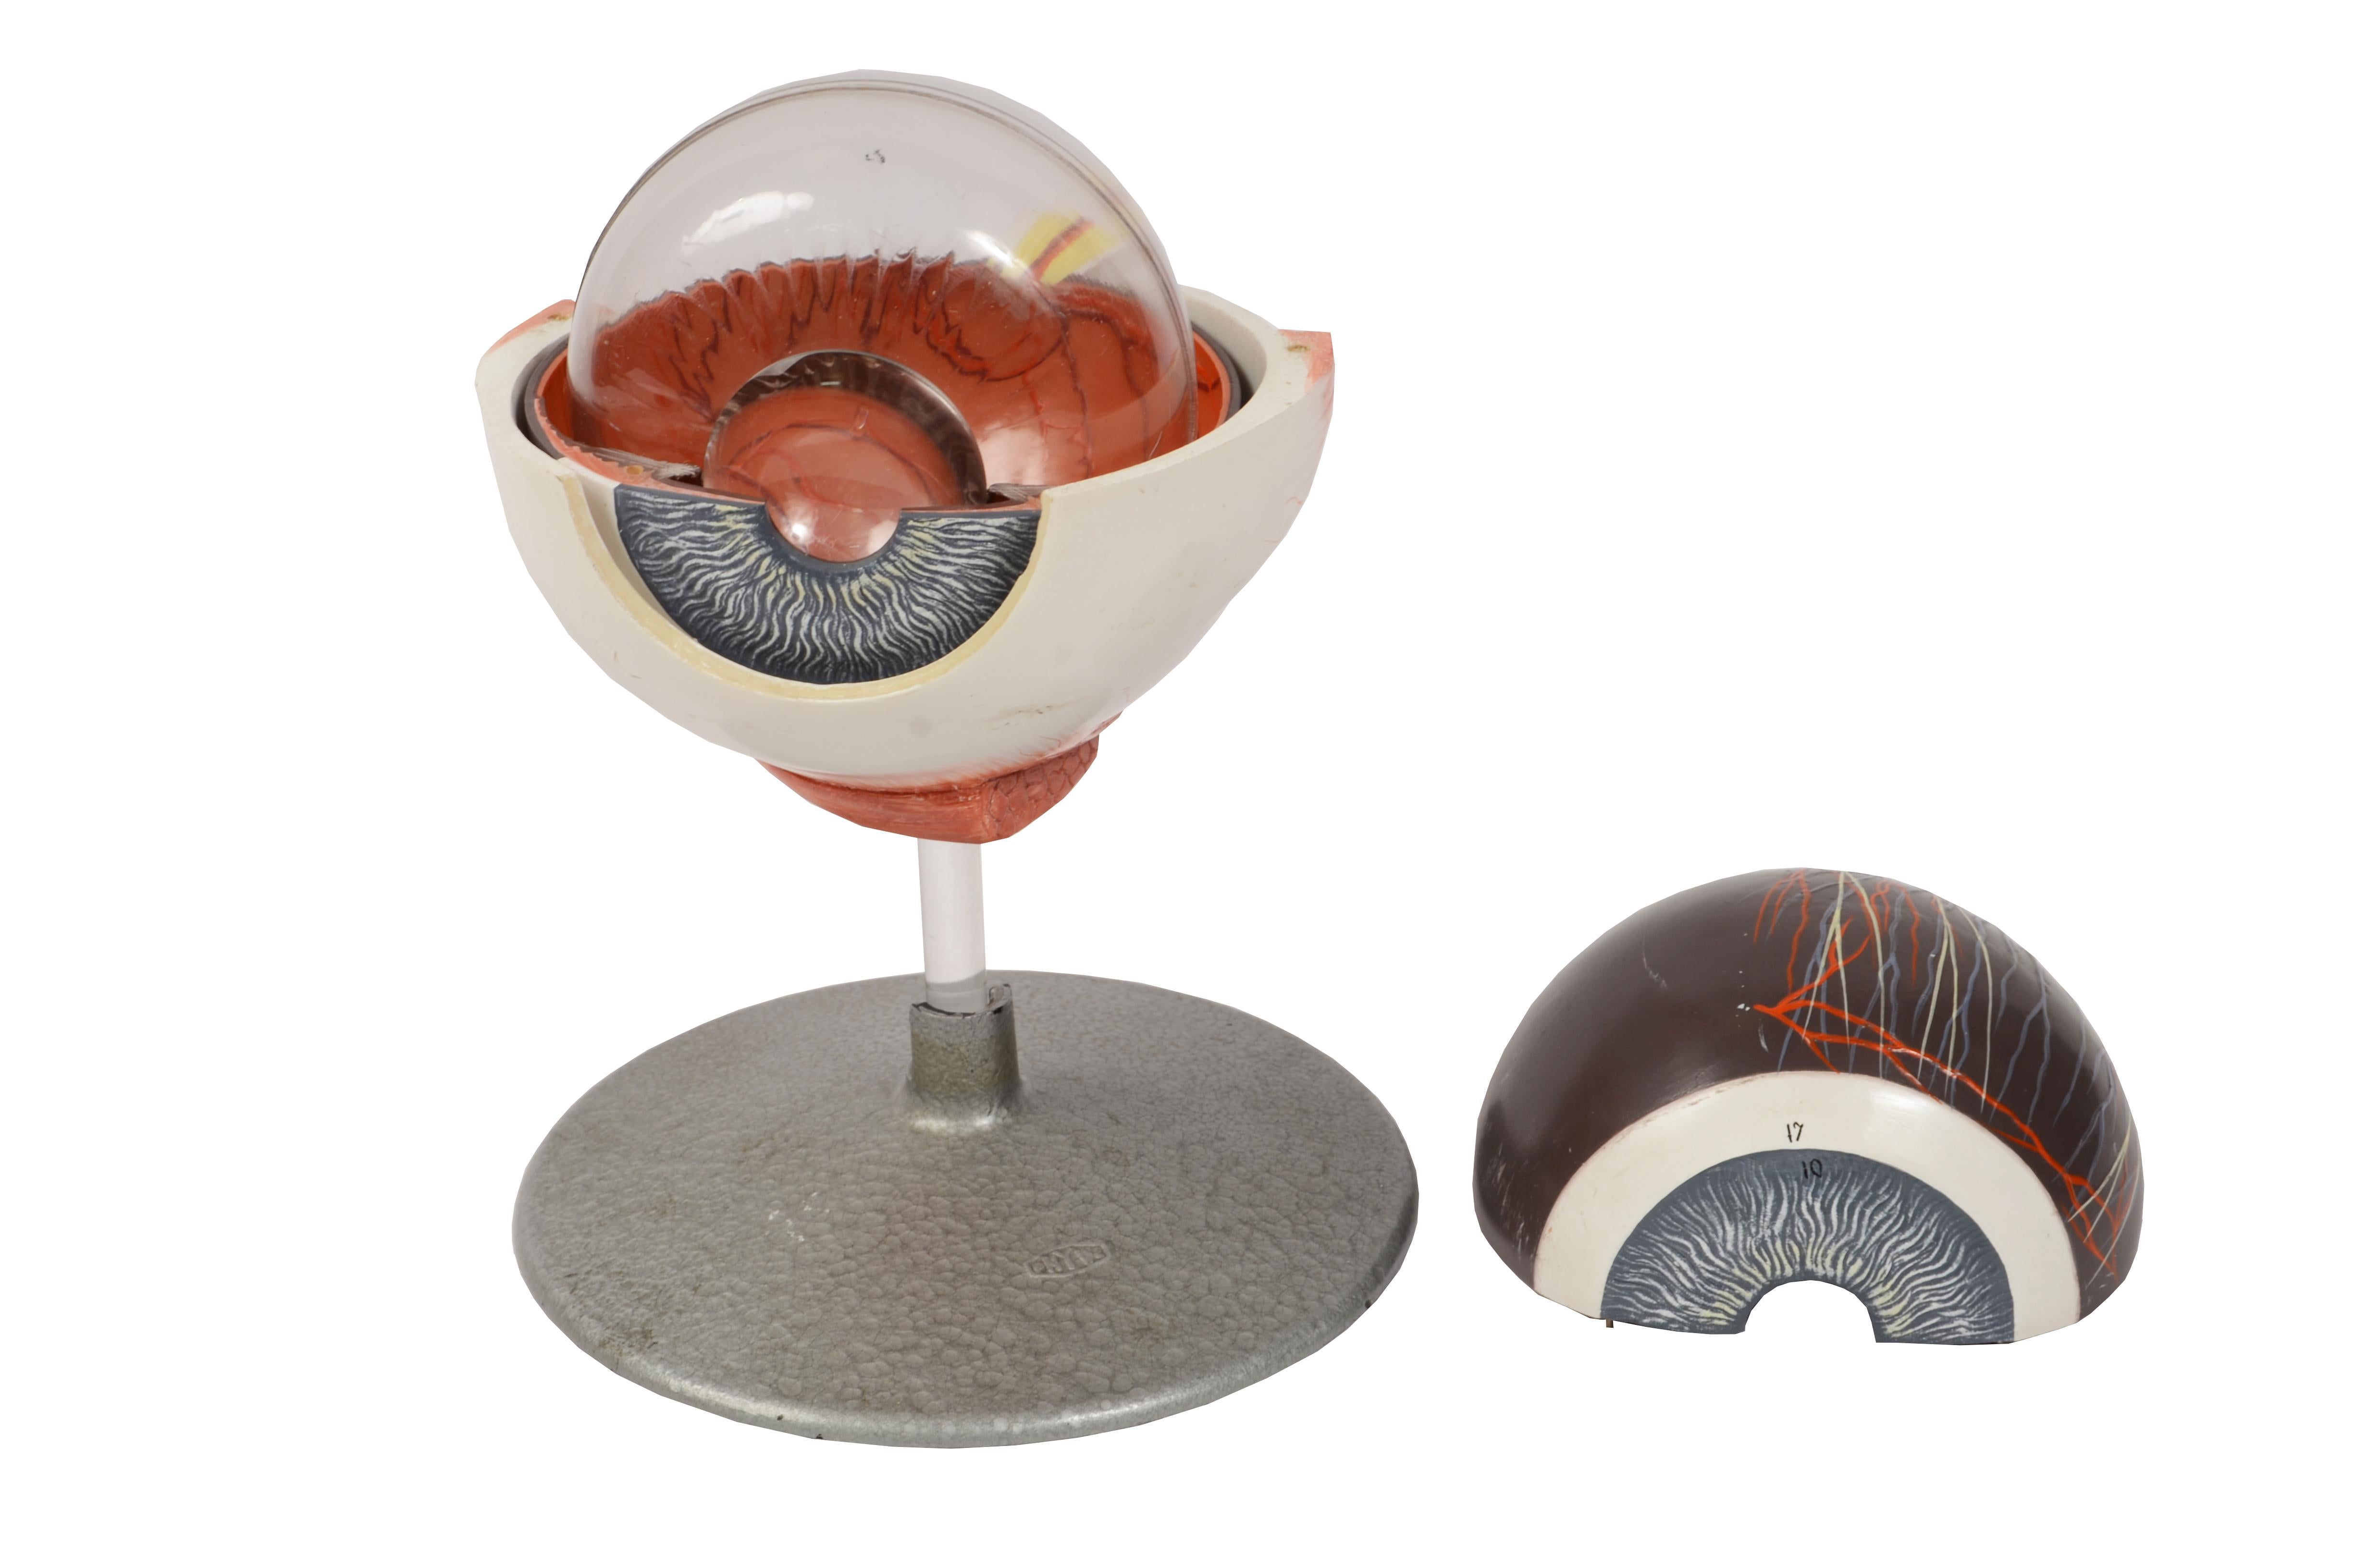 Plaster 1950s Phiwe Anatomical Didactic Model of Human Enlargedf Eye Antique Scientific